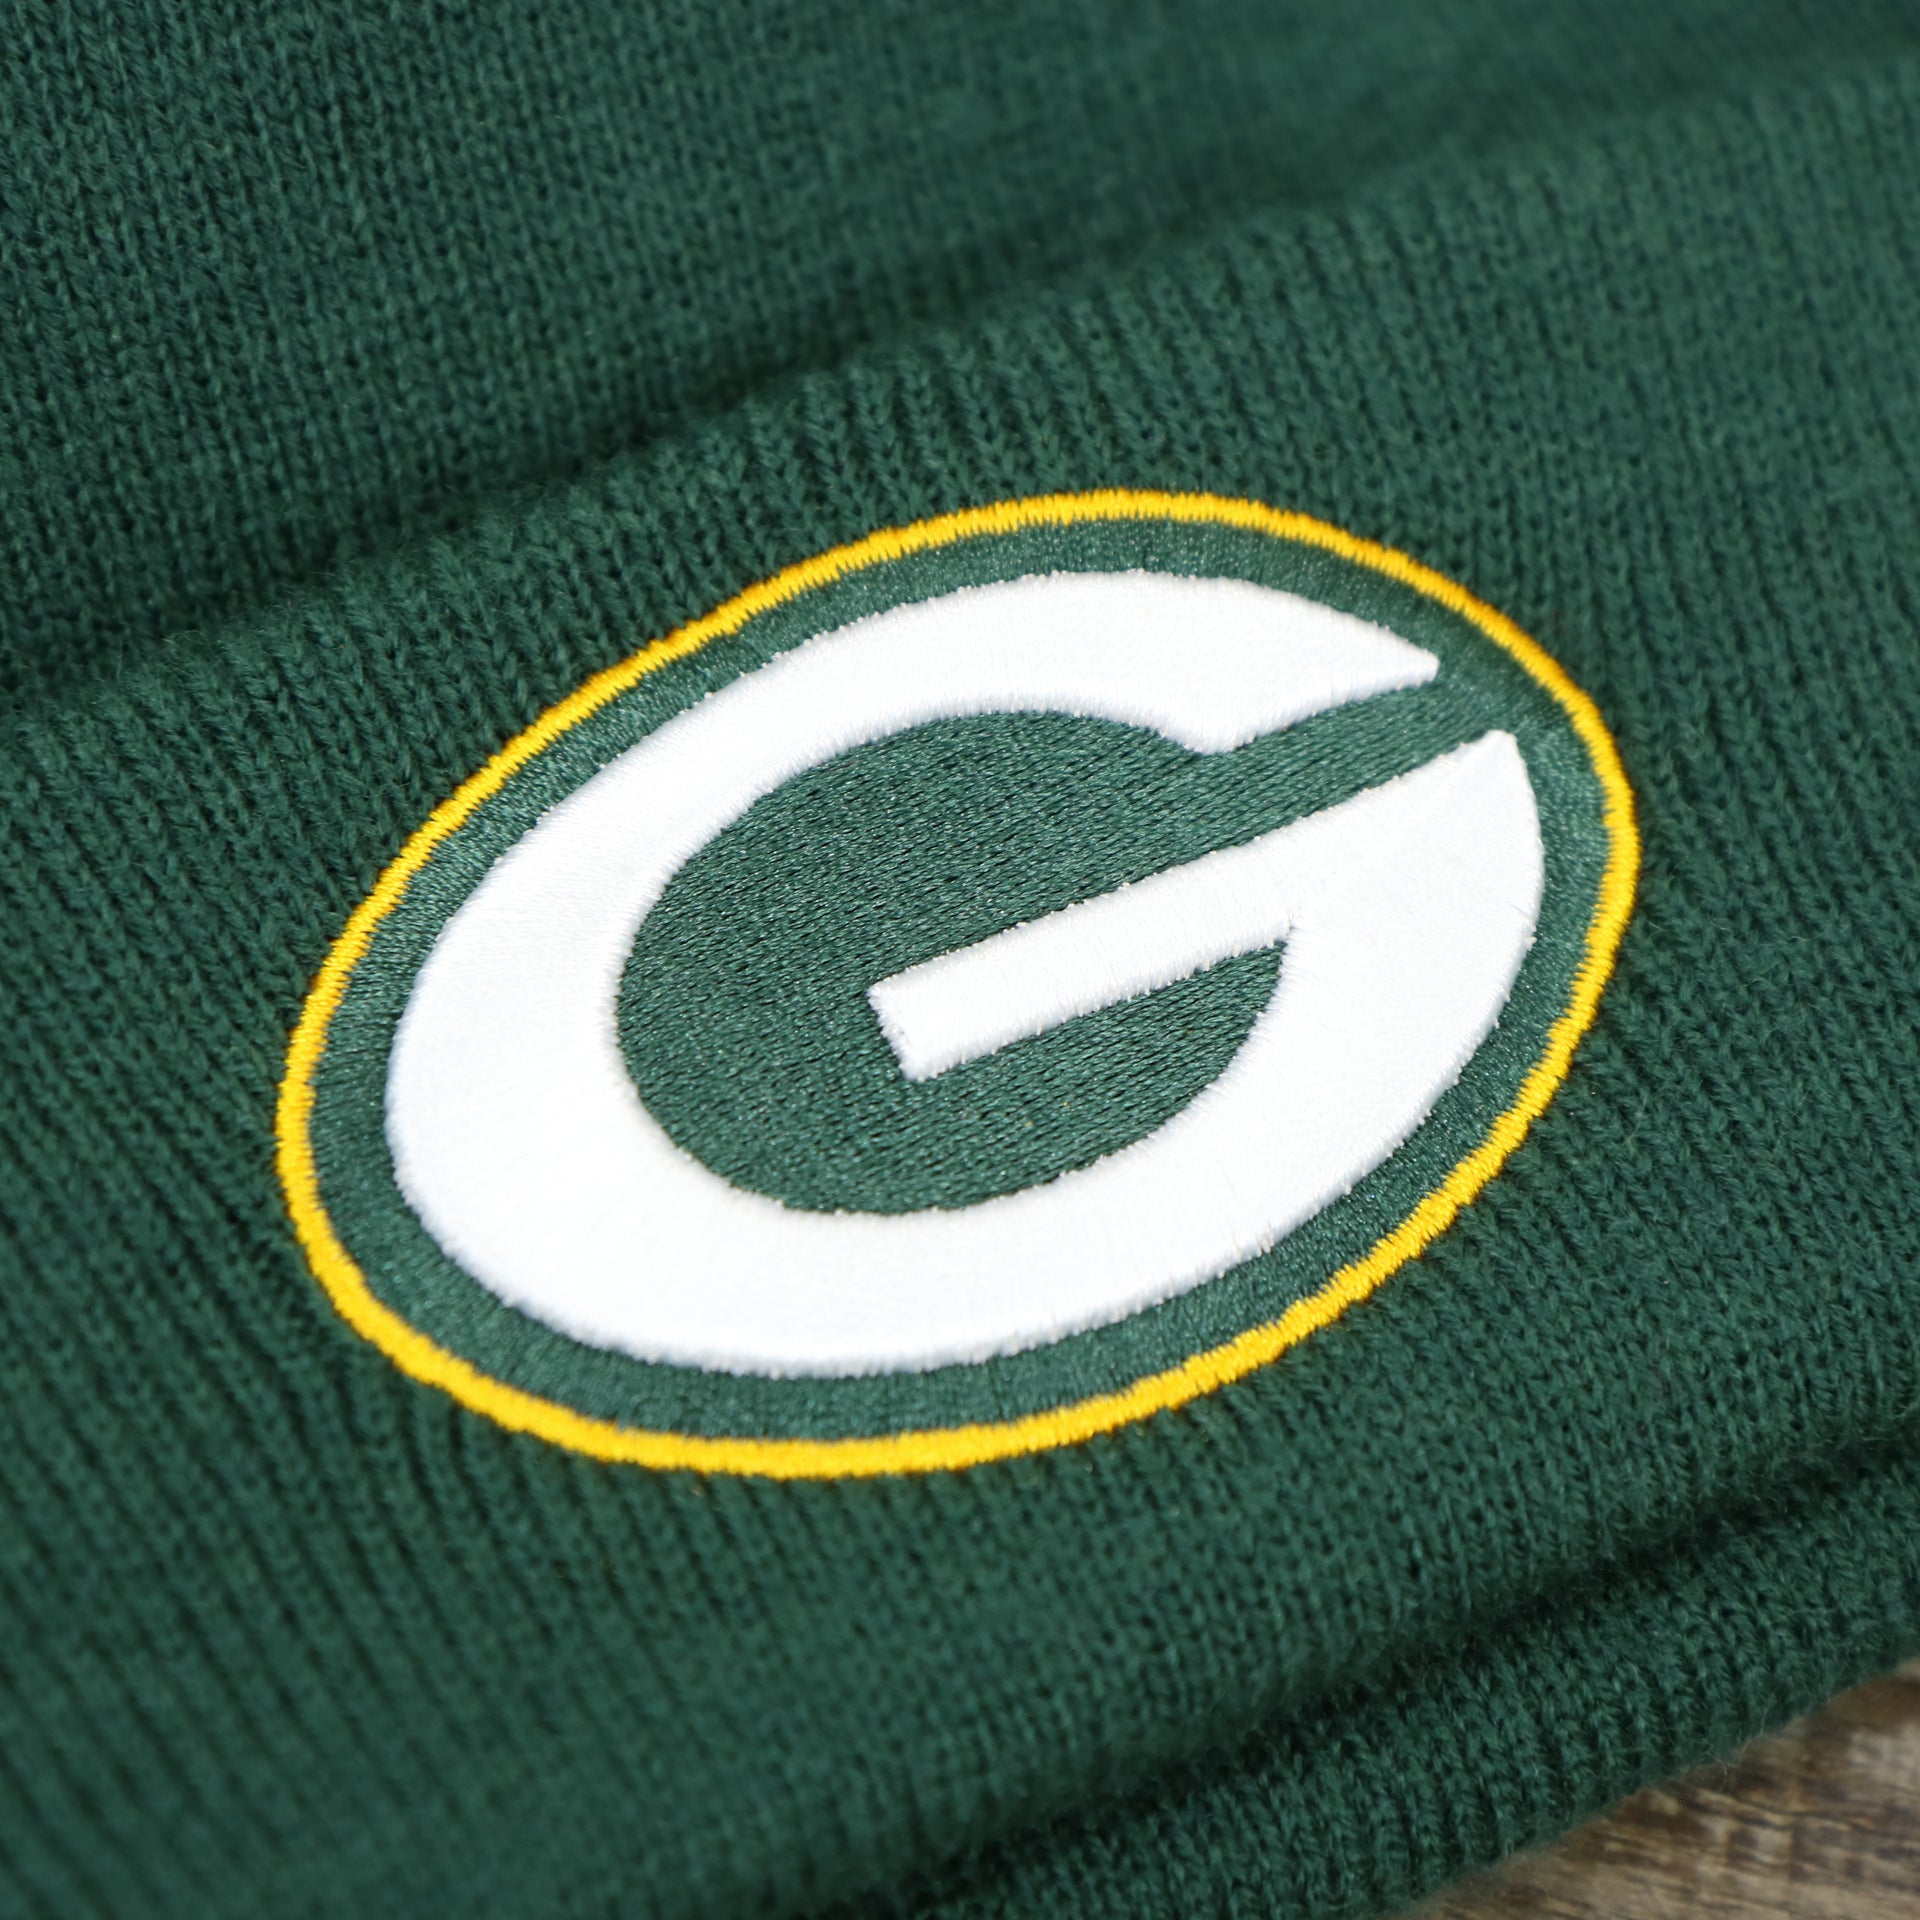 Green Bay Packers Winter Knit Raised Cuff NFL Beanie | Green Winter Beanie